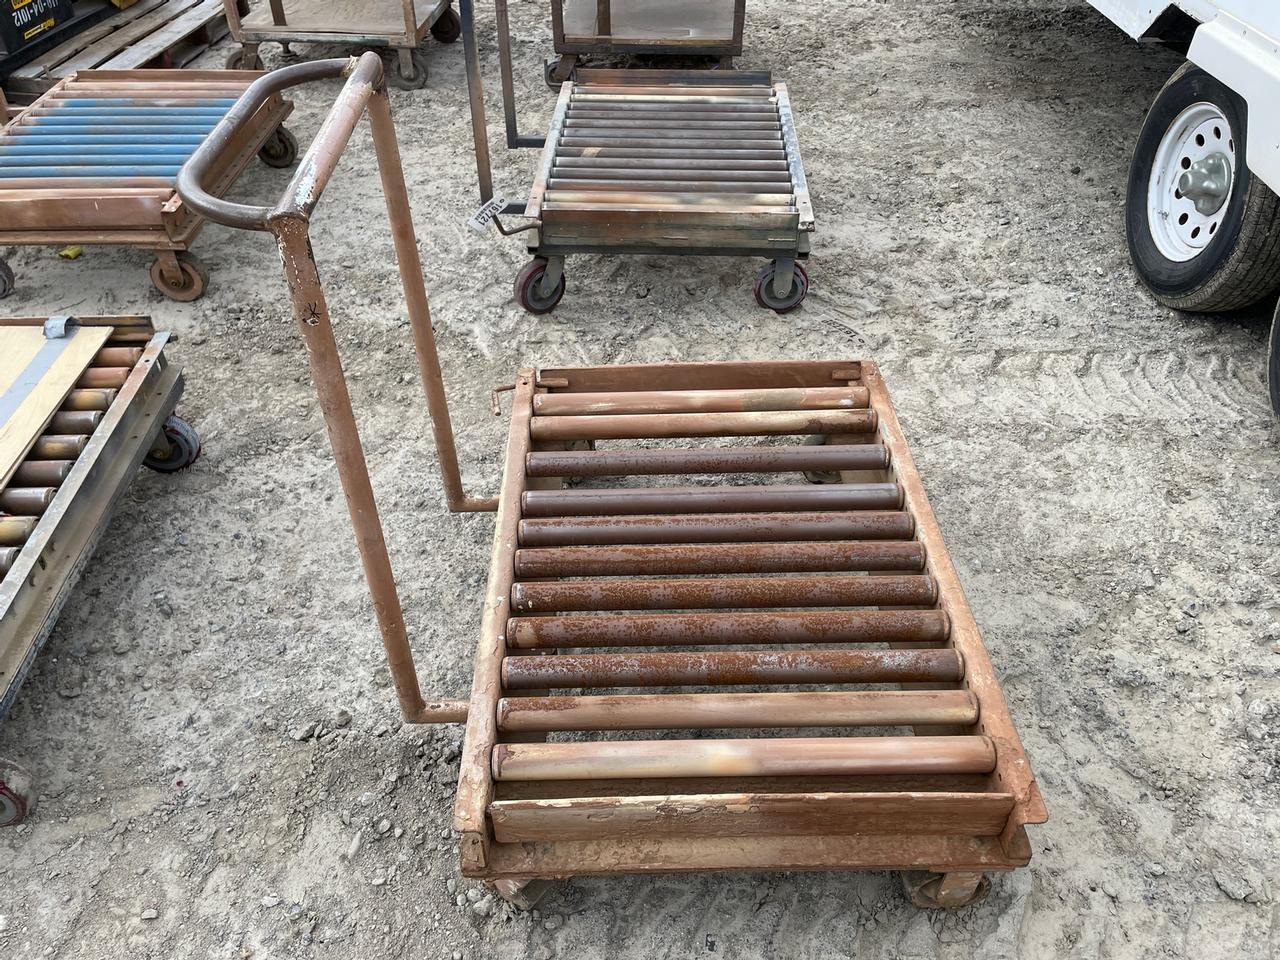 Conveyor Cart